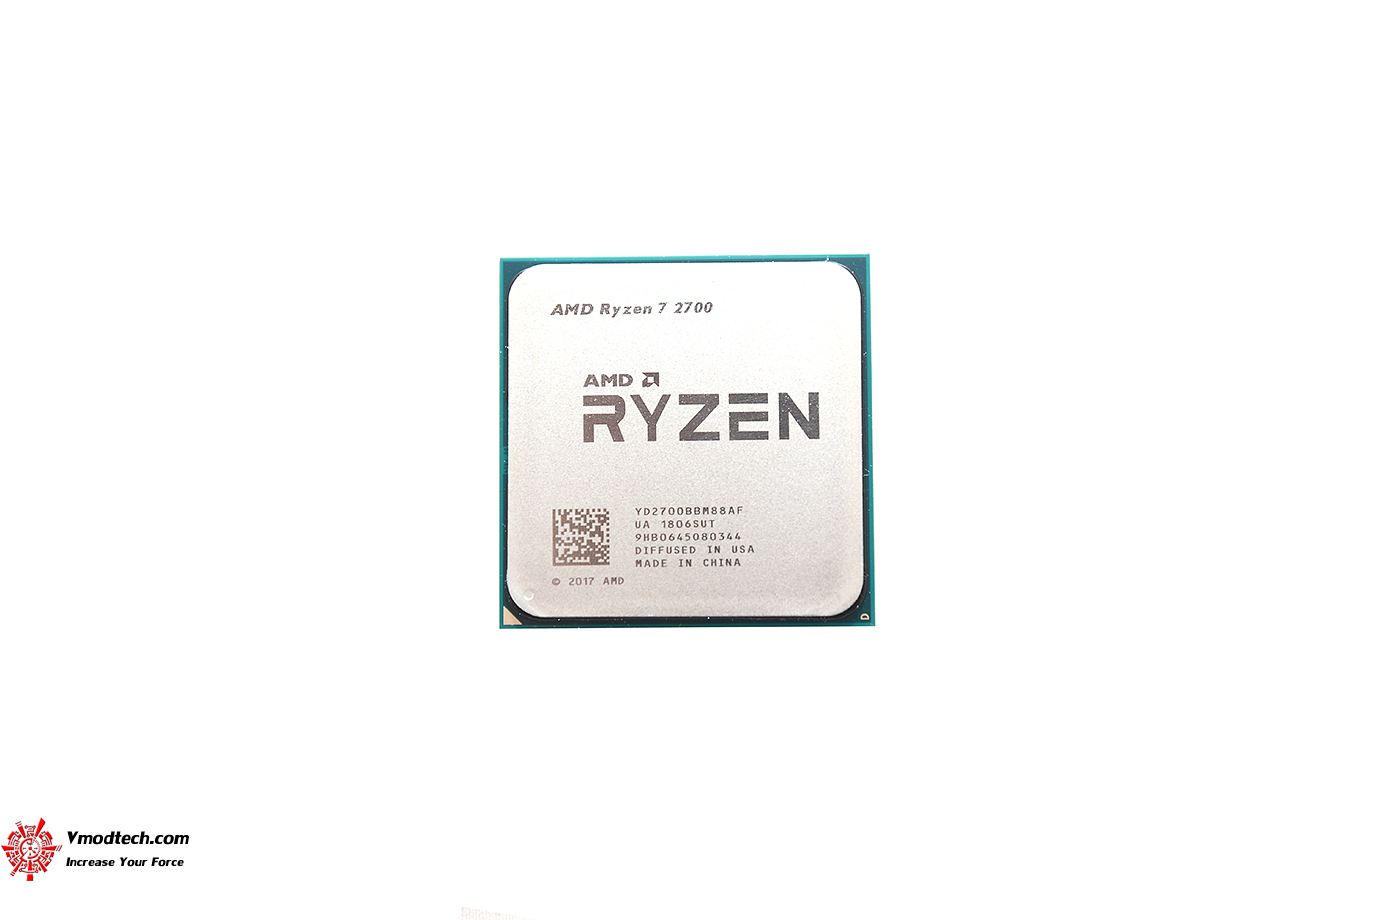 dsc 2336 AMD RYZEN 7 2700 and StoreMI Technology Review